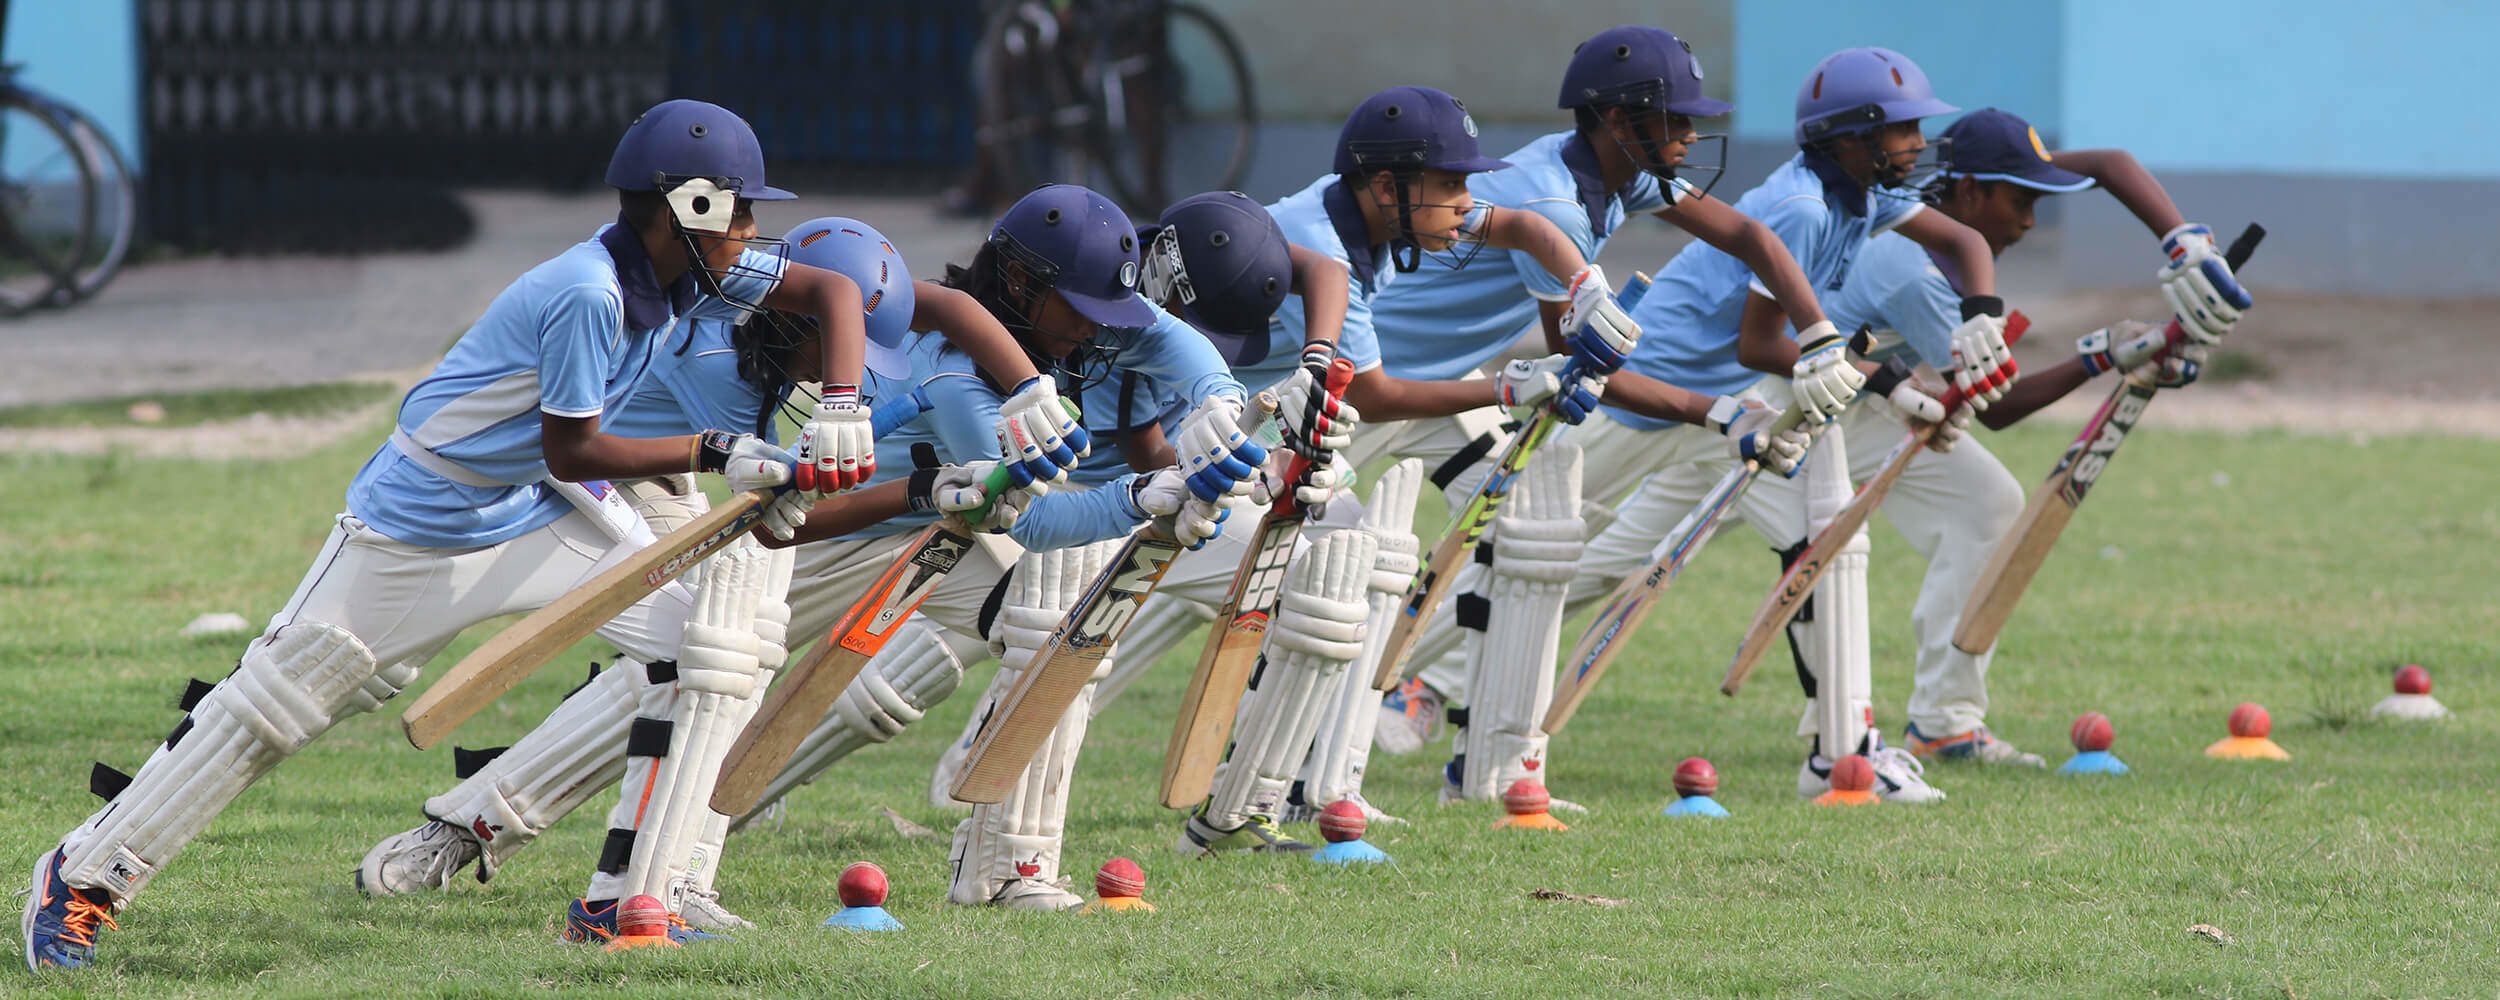 Kid’s Cricket Coaching Camps in Kolkata